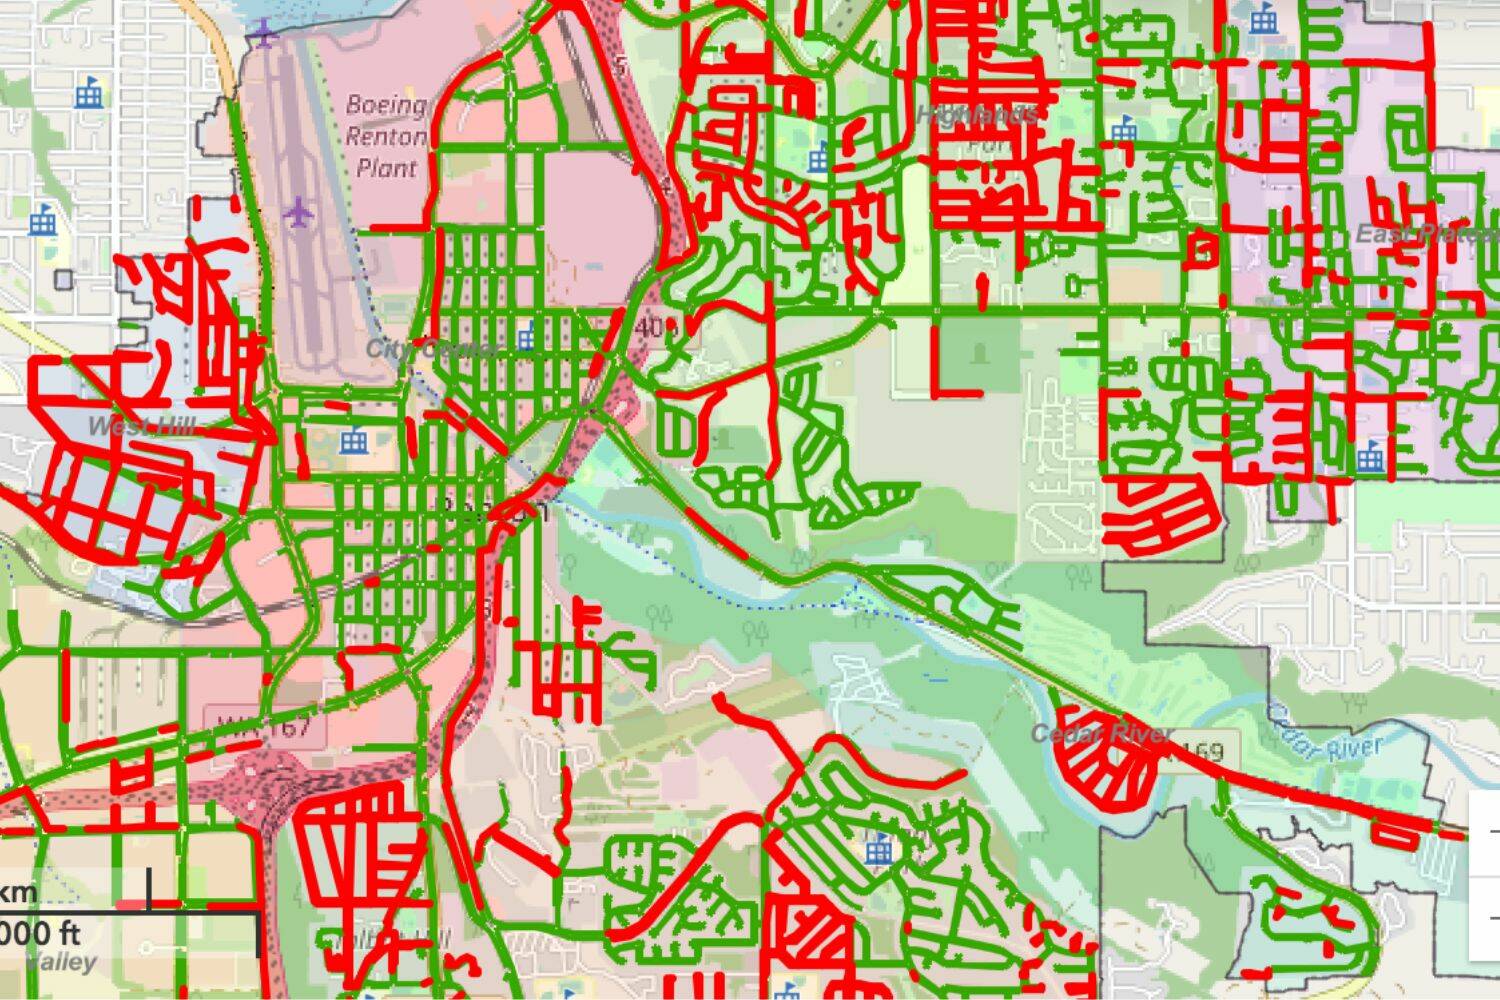 The City of Renton’s interactive sidewalk map. (Screenshot from City of Renton website)